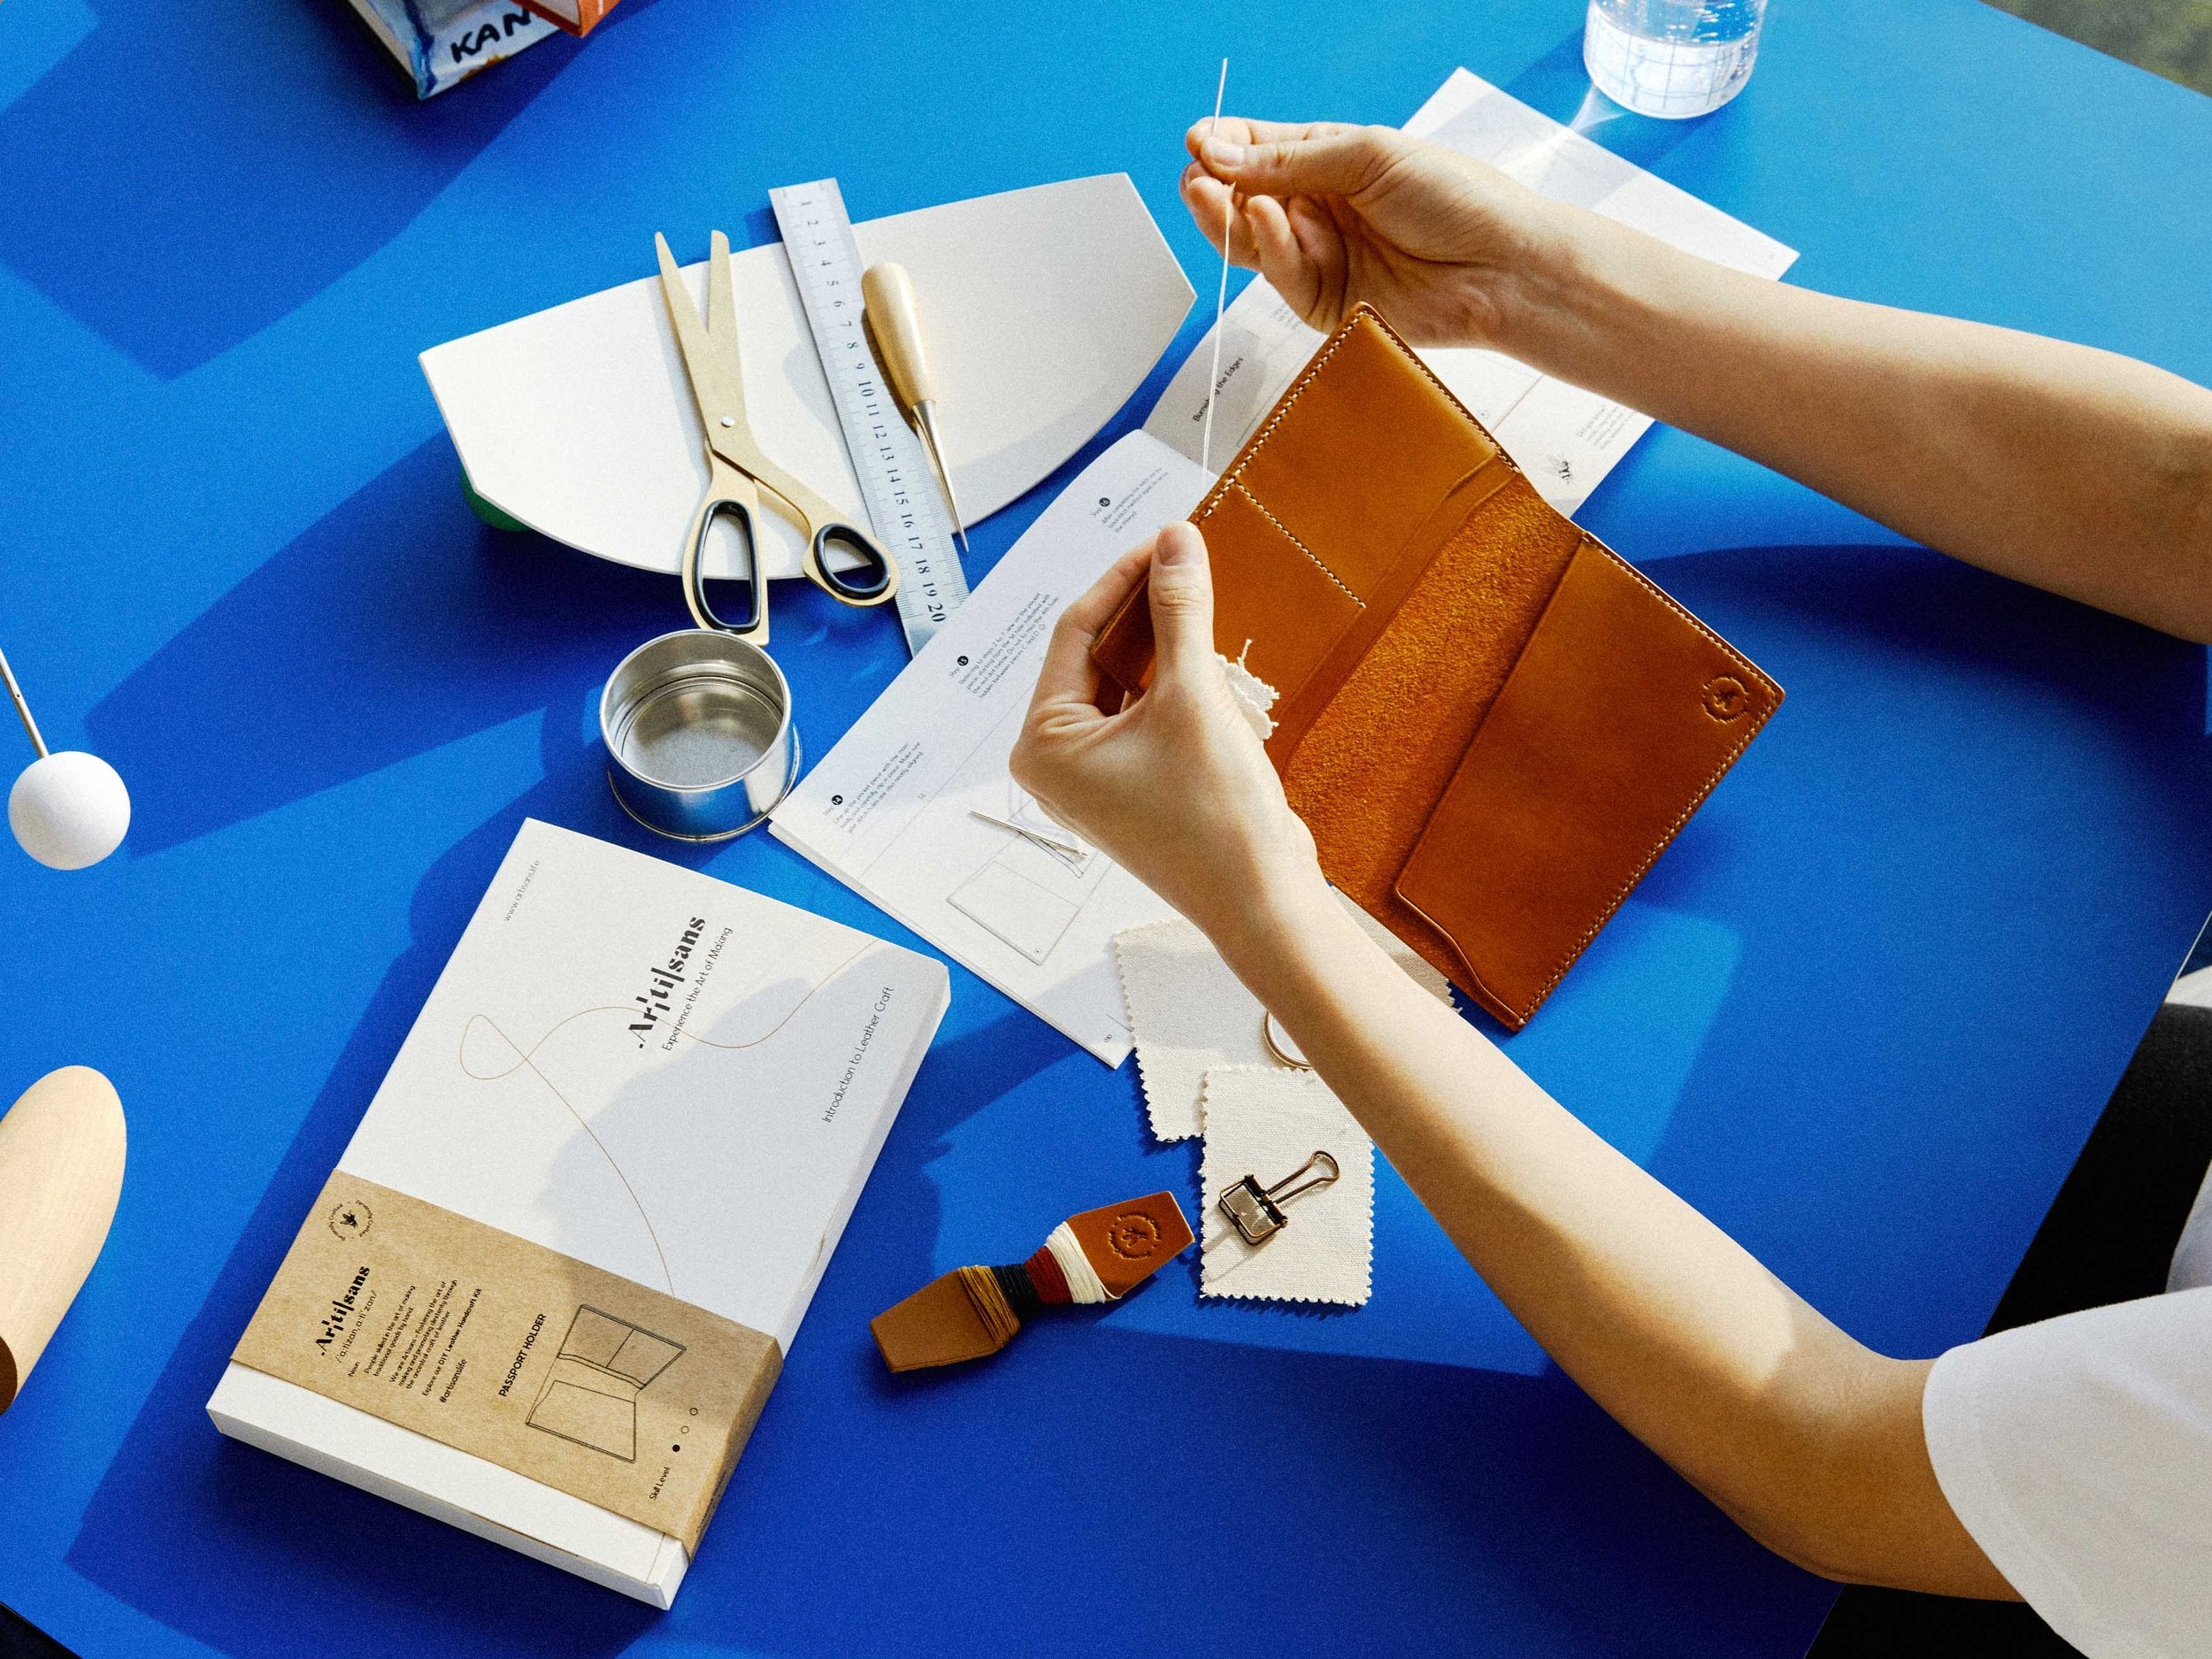 Leather Passport Case - Craft Kit